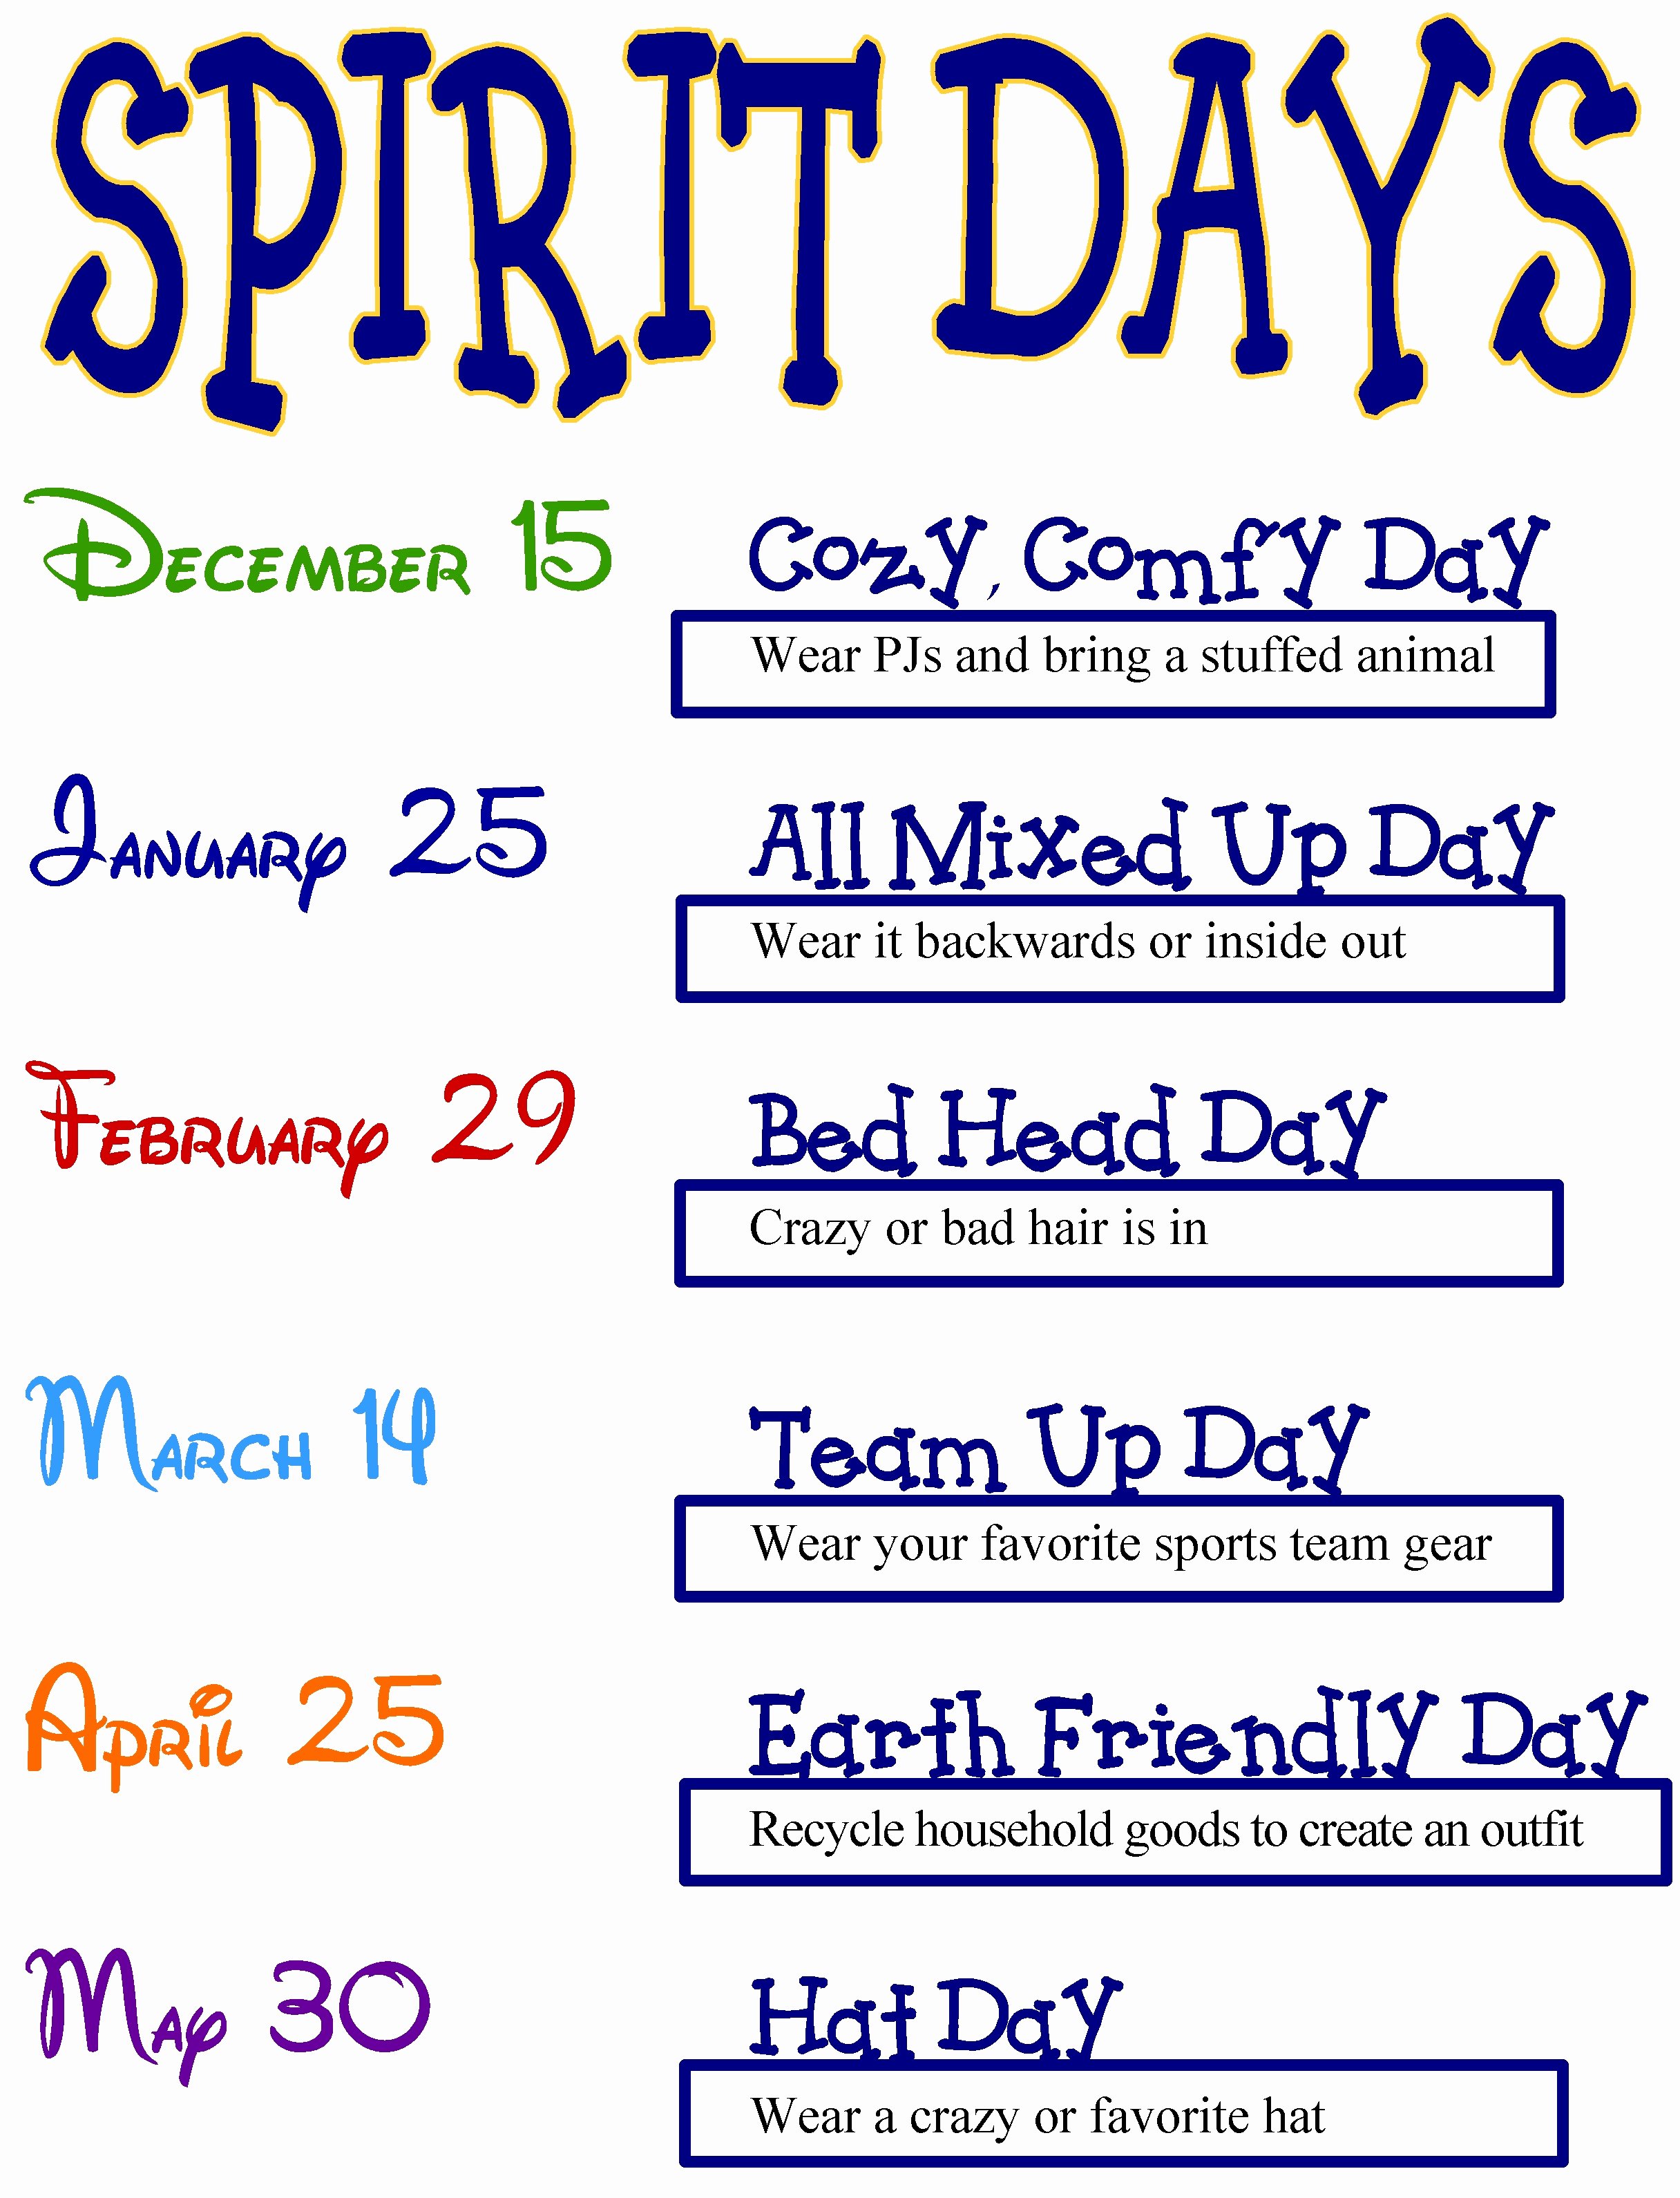 School Spirit Week Flyer Template